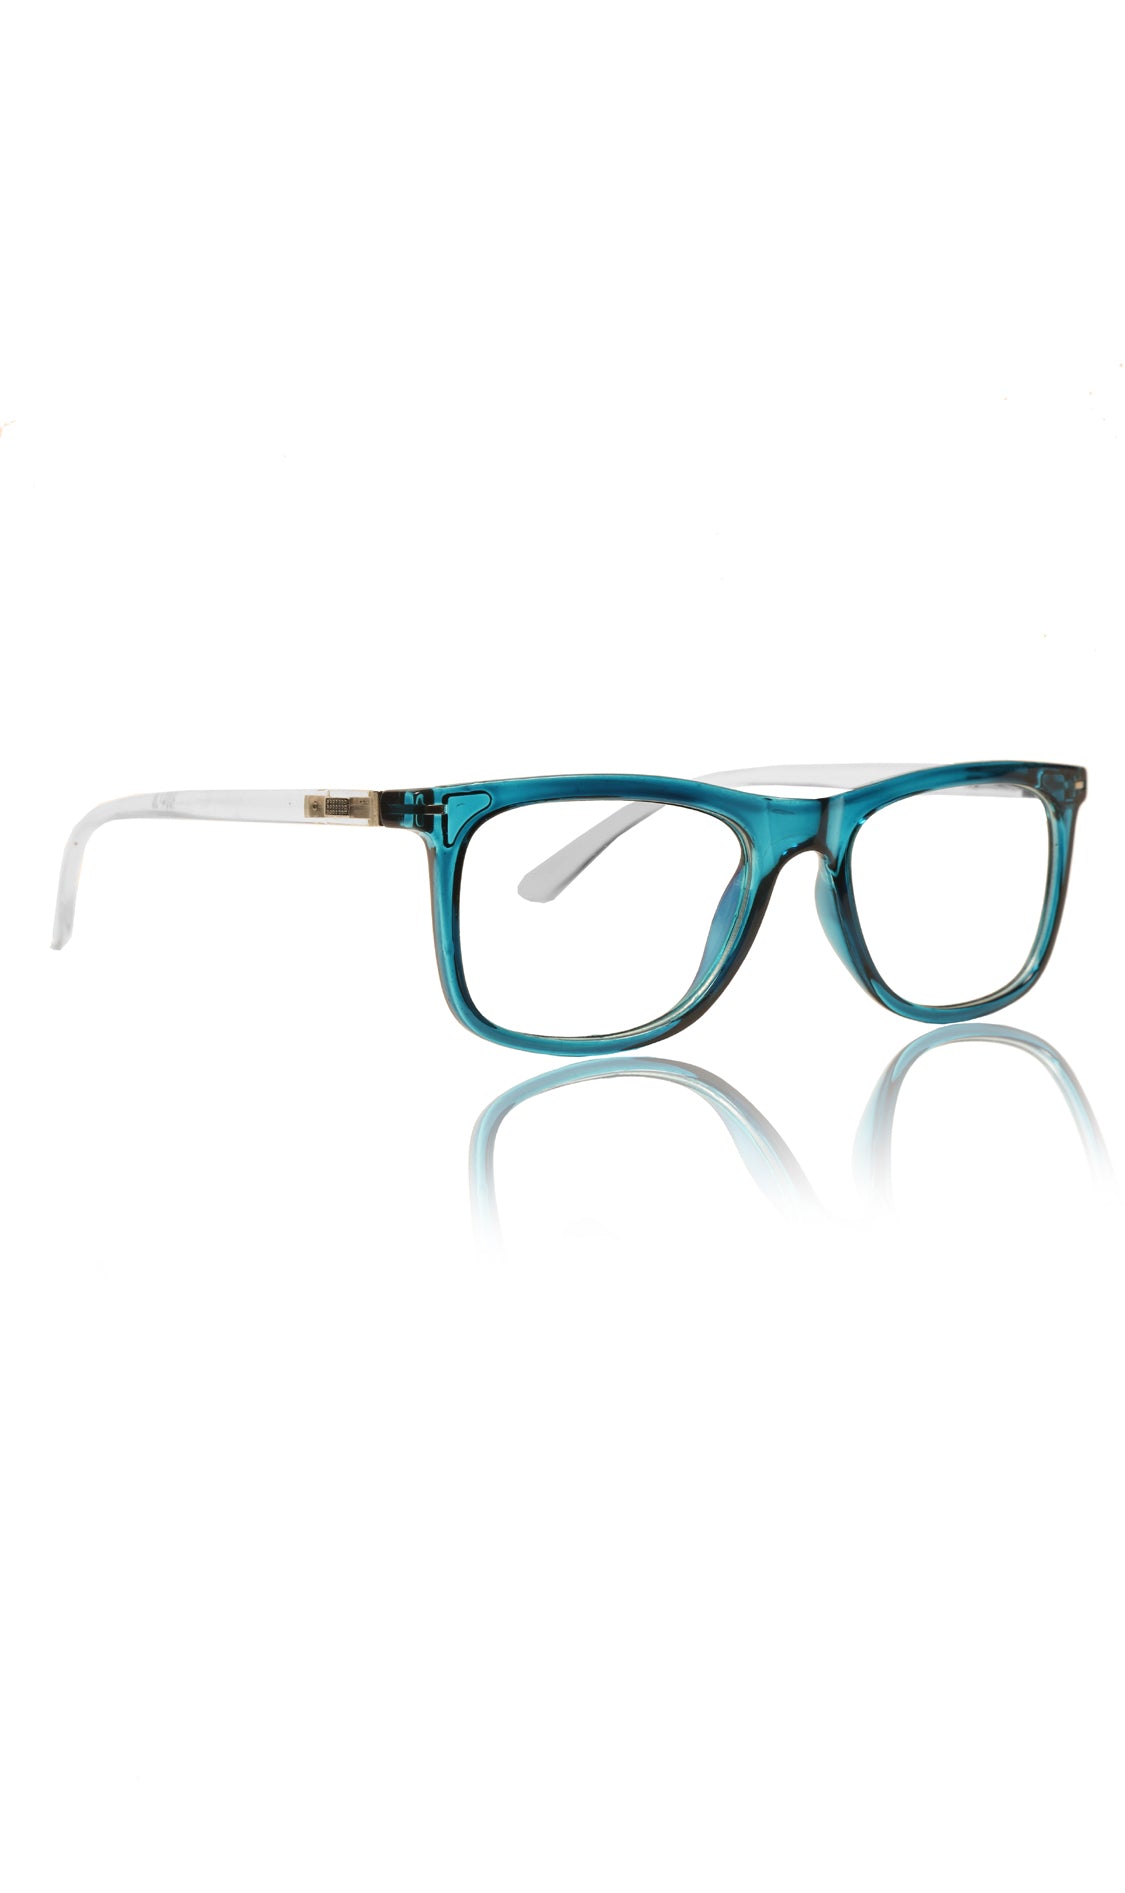 Jodykoes® Colour Frame Series Eyewears | Blue Rays Protection Warfare Stylish Spectacles With Anti Glare Eyeglasses For Men and Women Eyewears (Turquoise Blue) - Jodykoes ®